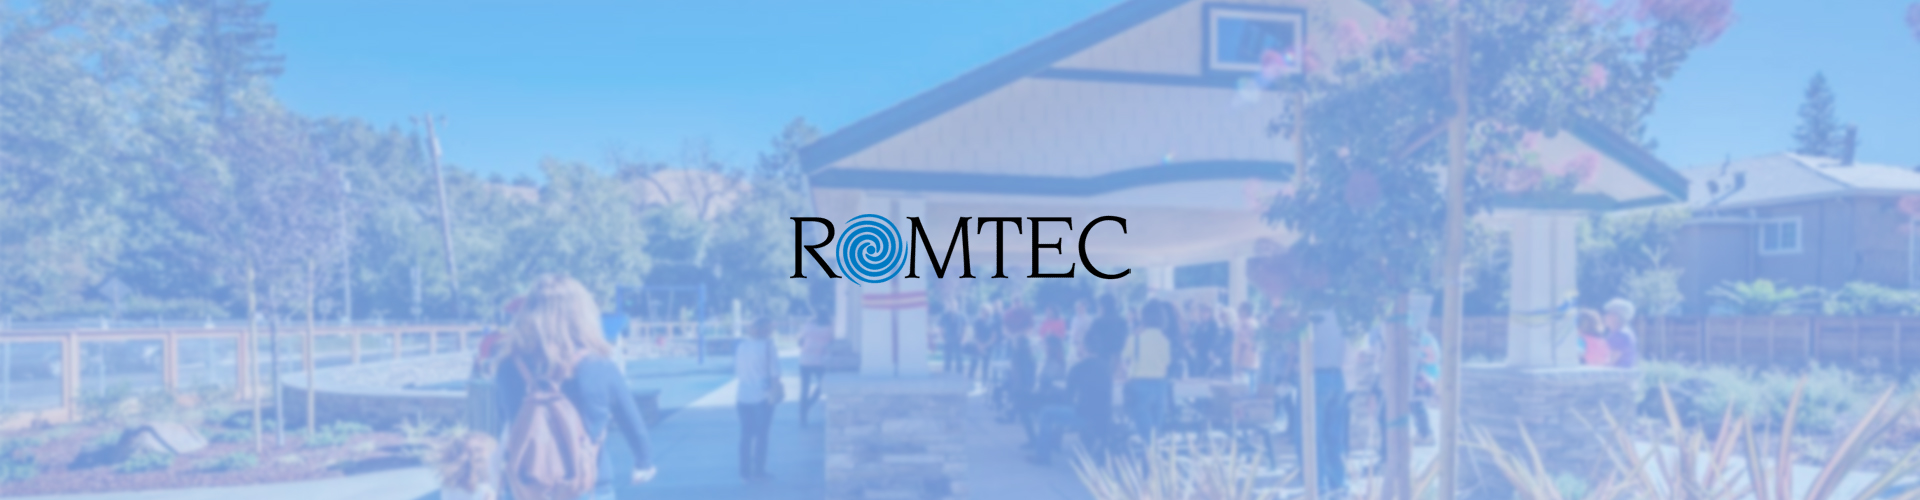 Case Study - Romtec Utilities & Romtec Inc